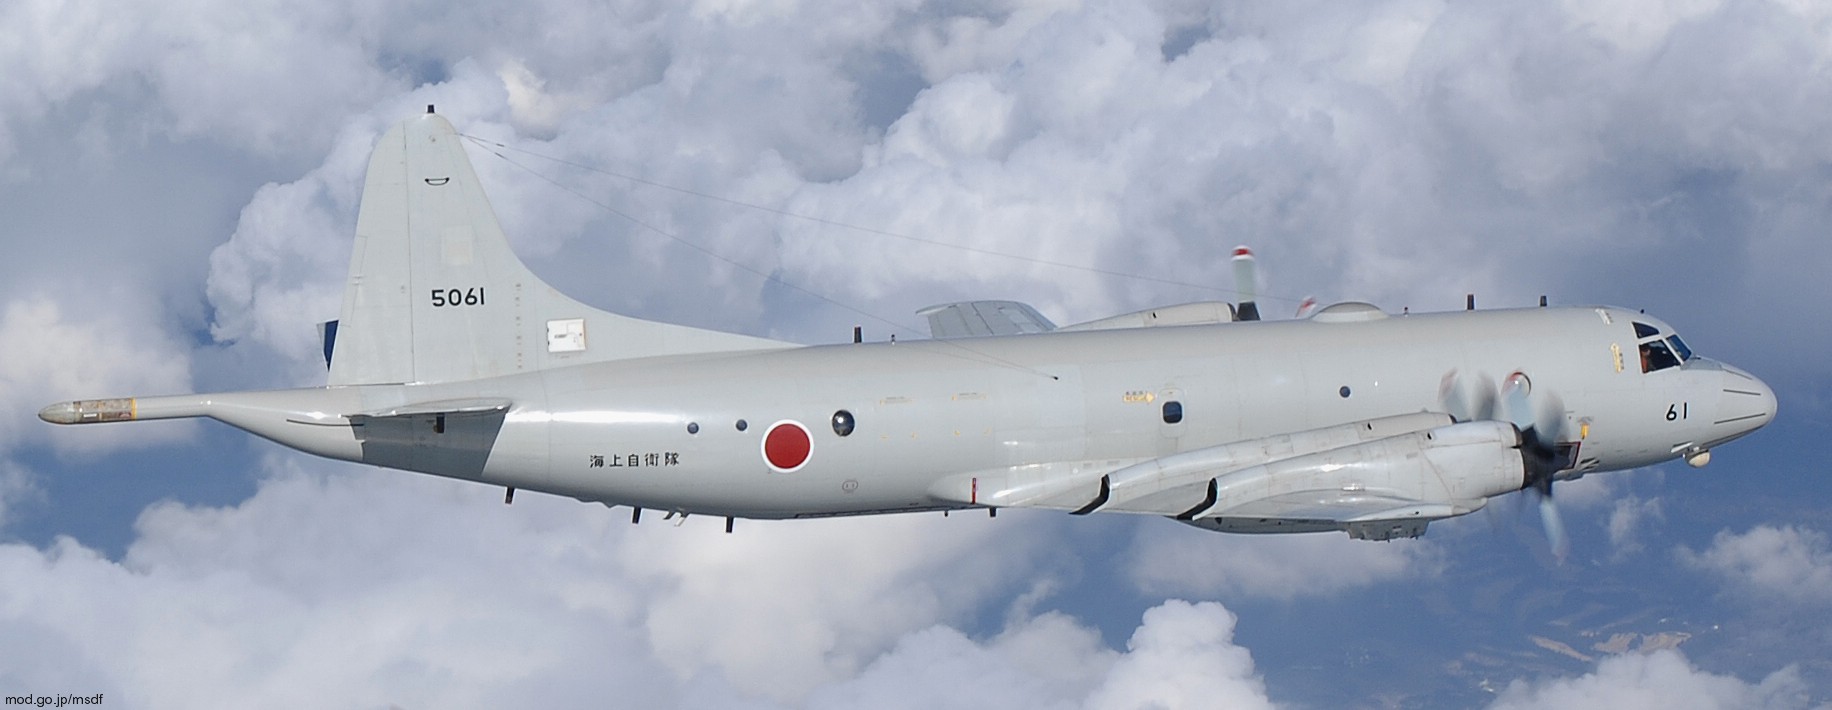 kawasaki p-3c orion patrol aircraft mpa japan maritime self defense force jmsdf 5061 03